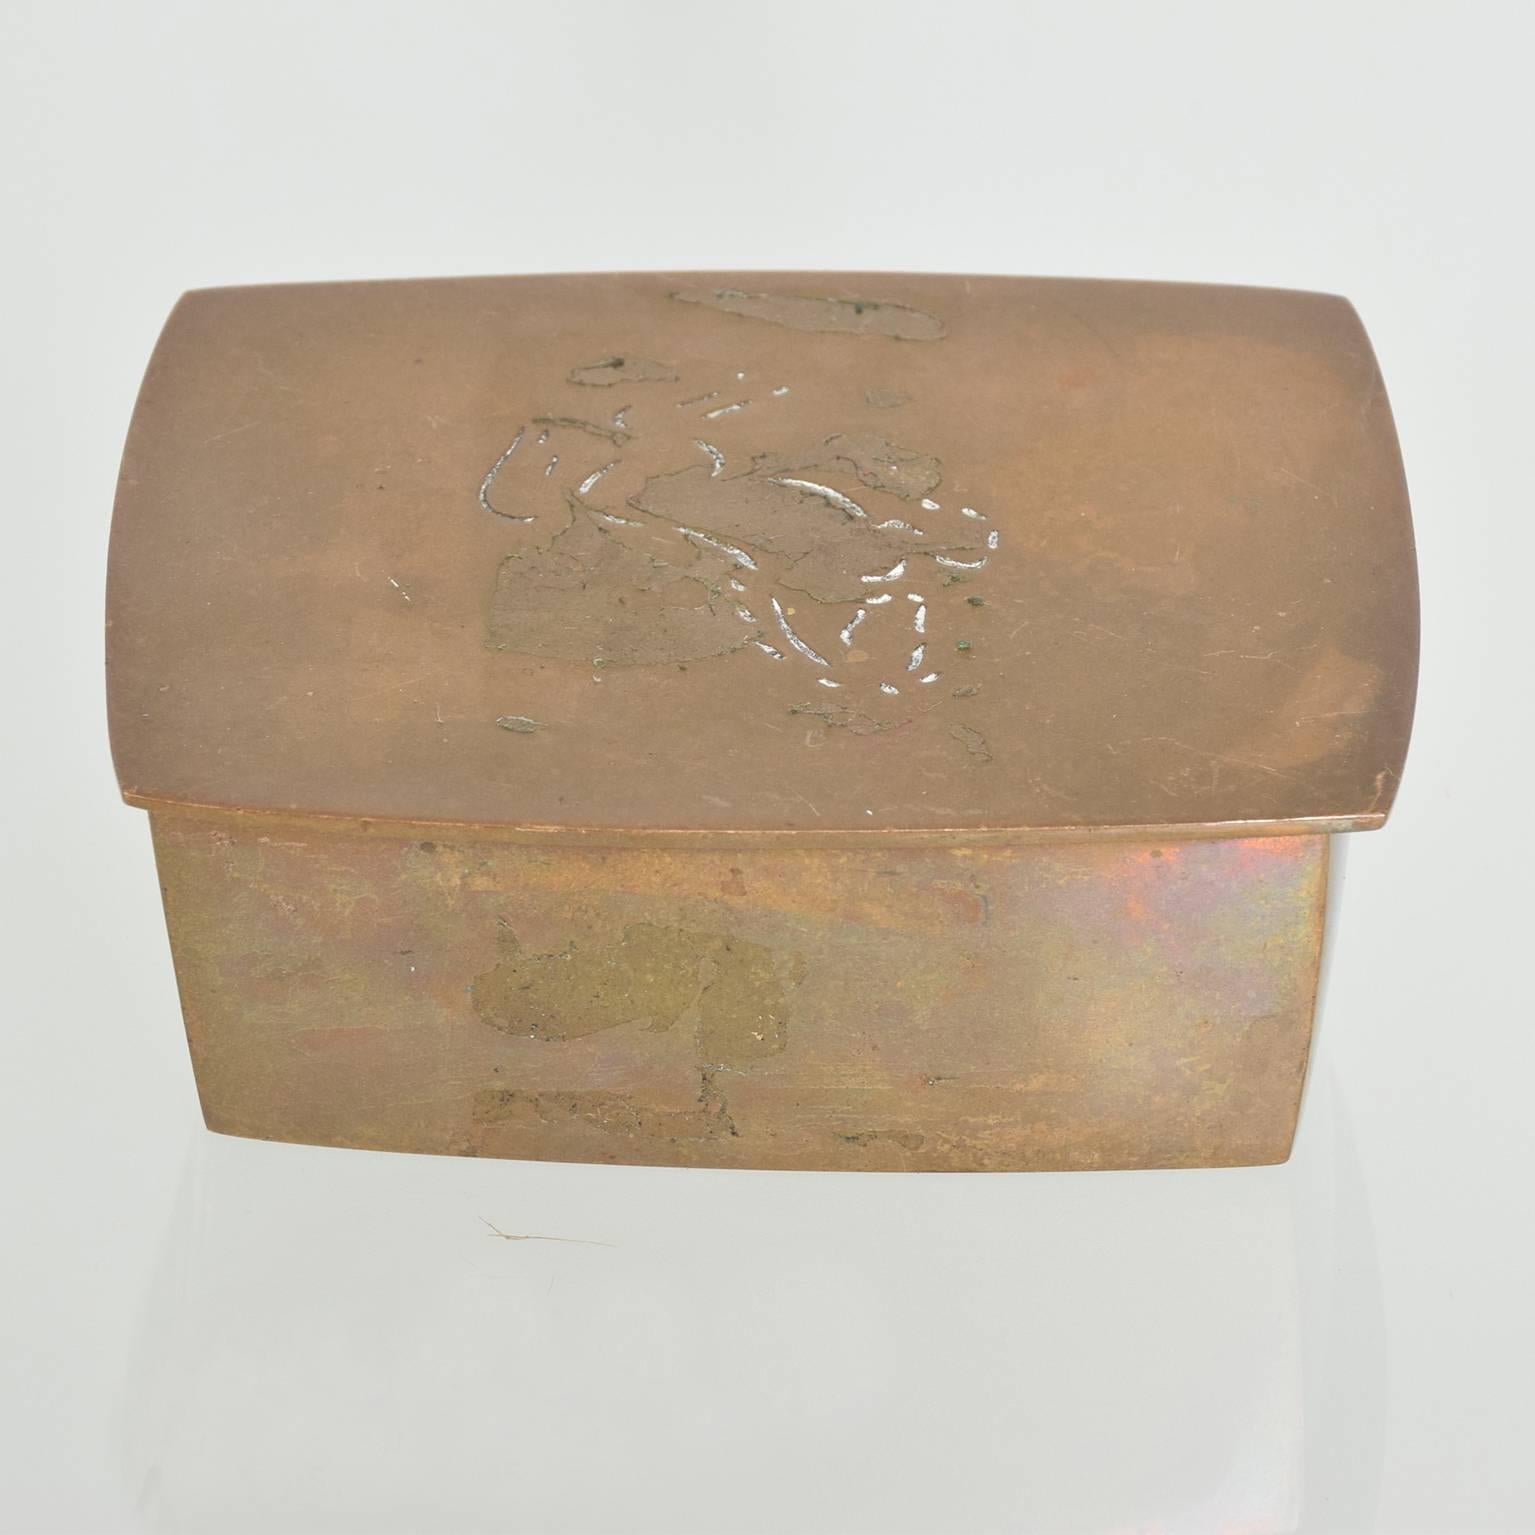 decorative bronze box by Wah Ming Chang.
Dimensions: 1 3/4